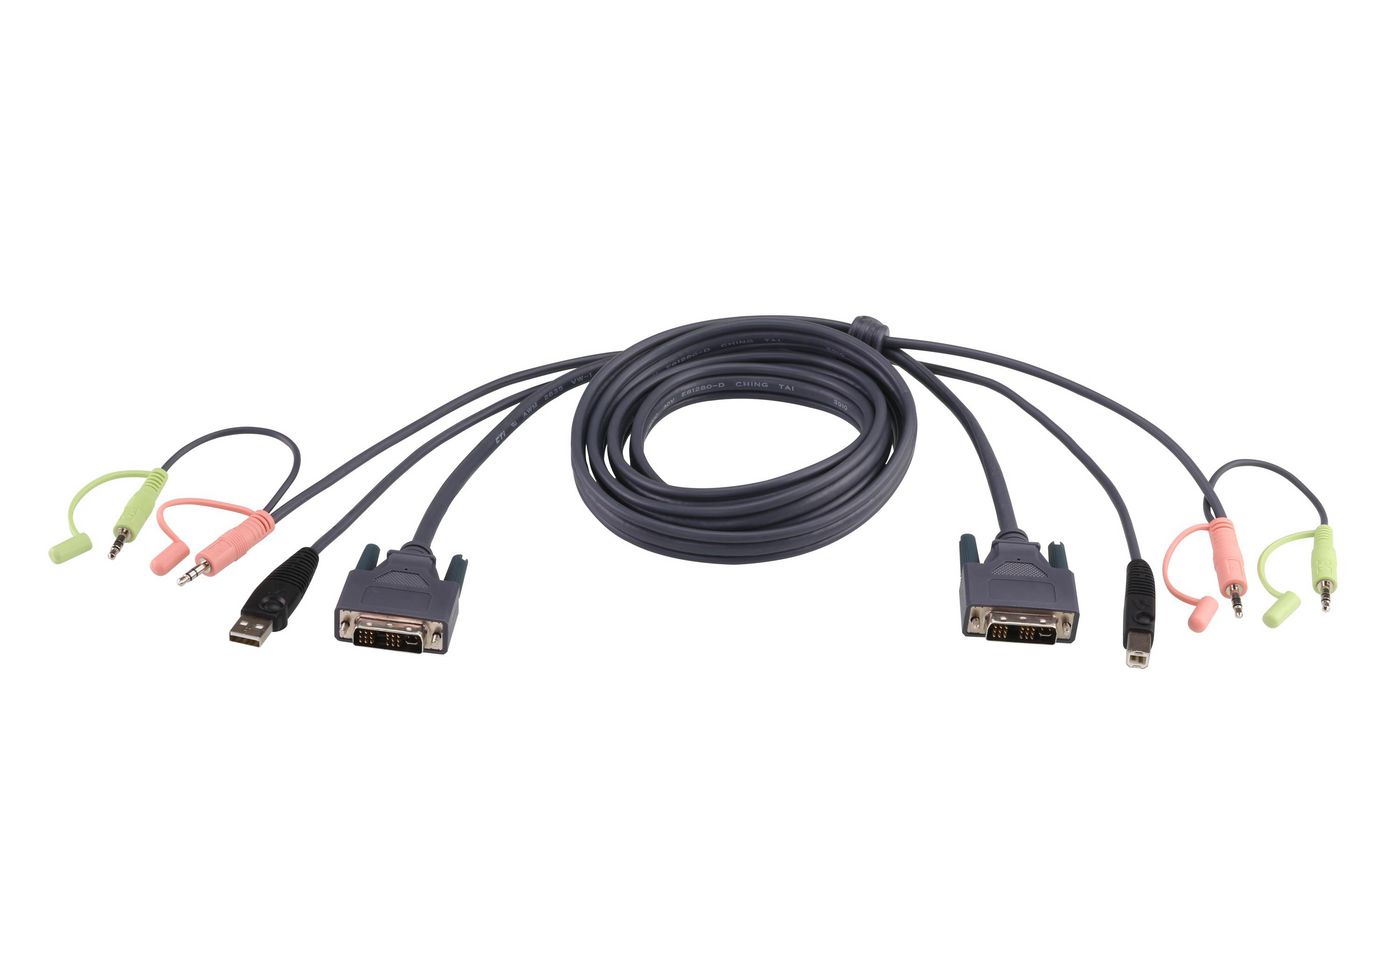 Aten 2L-7D03UD DVID Dual Link Cable 3m 